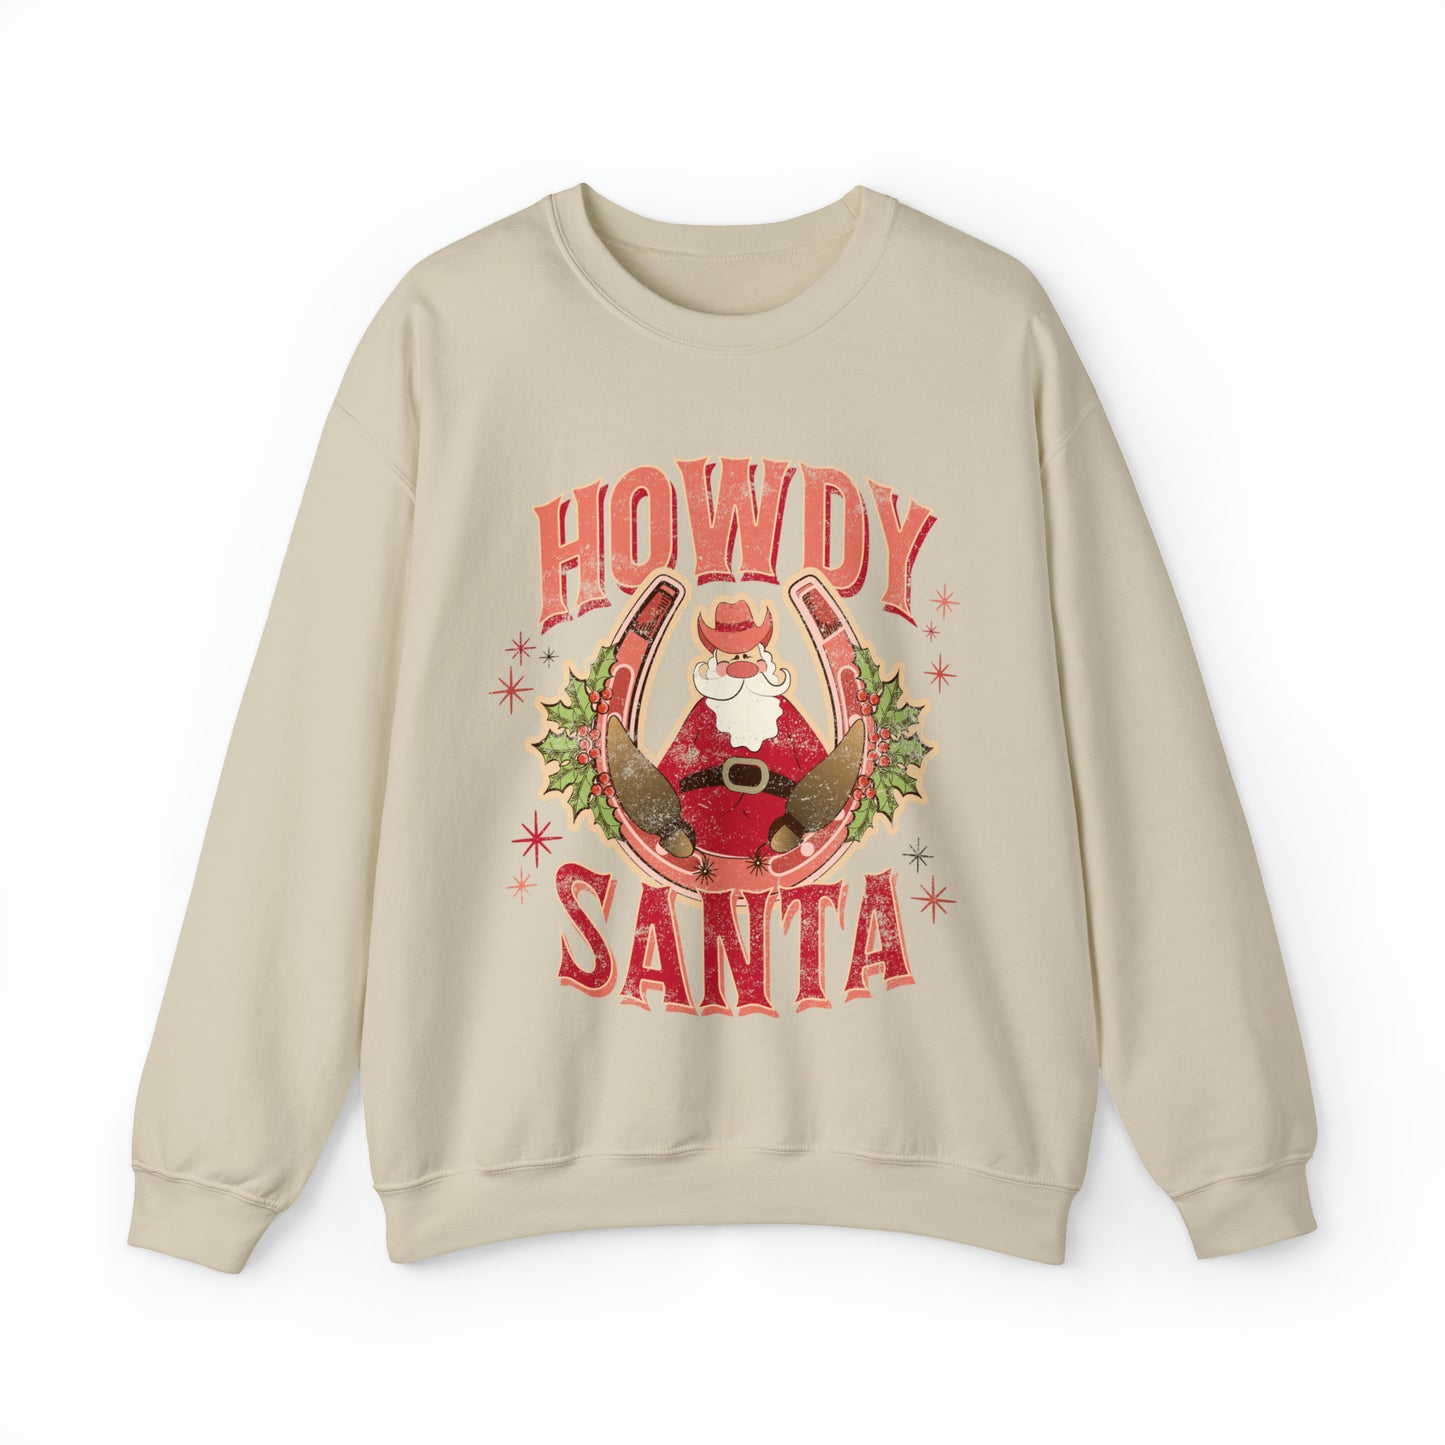 Howdy Santa Sweatshirt